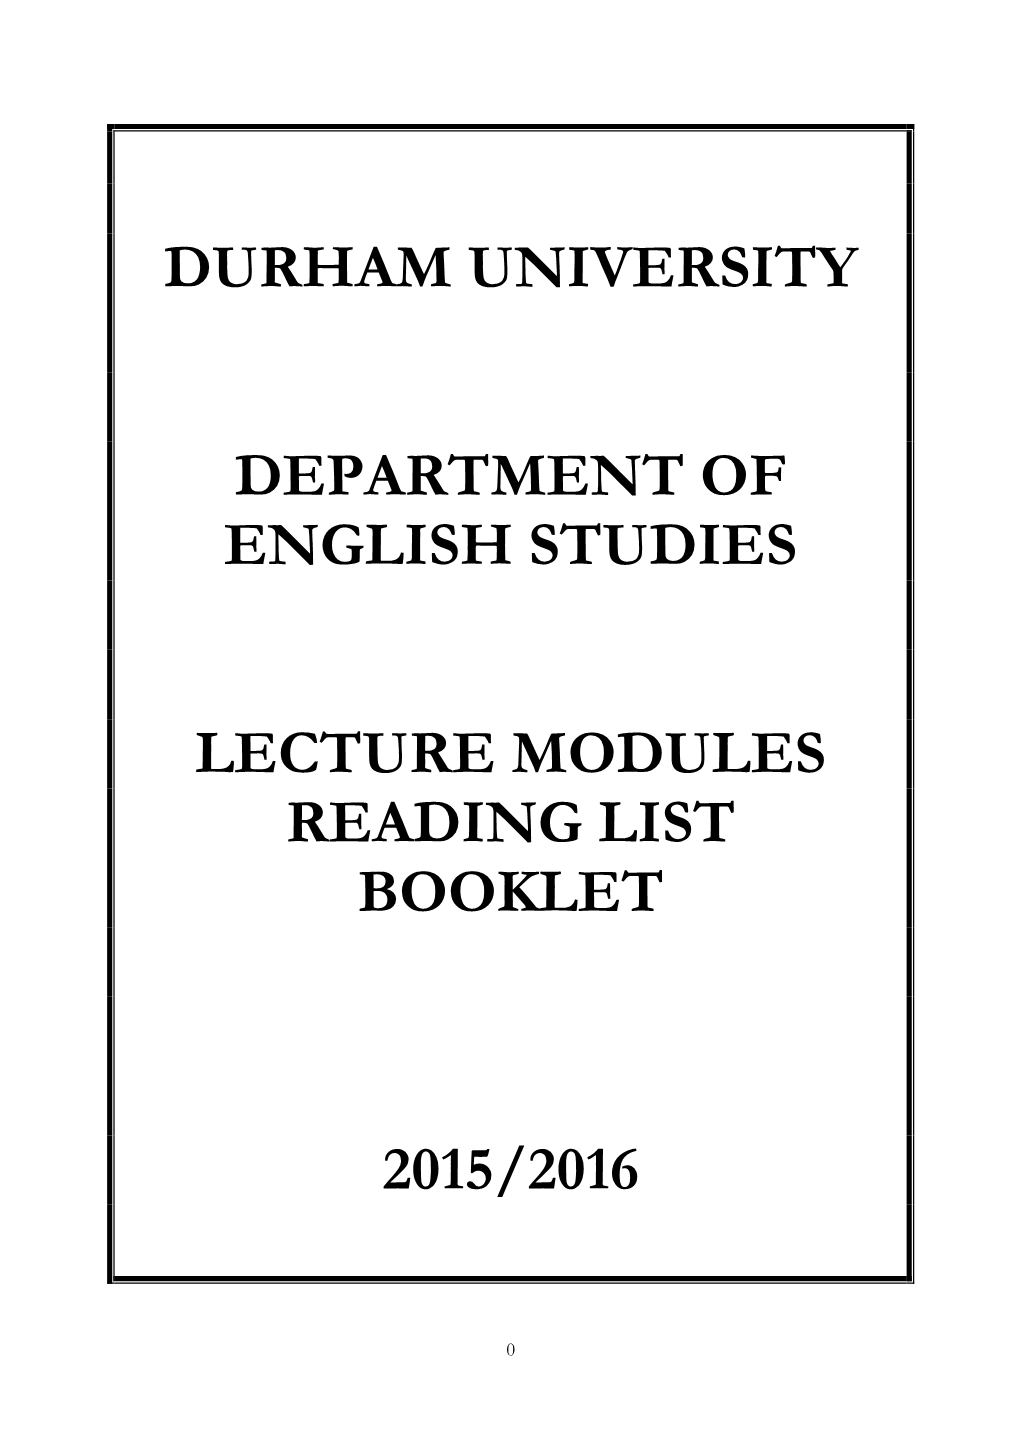 Durham University Department of English Studies Lecture Modules